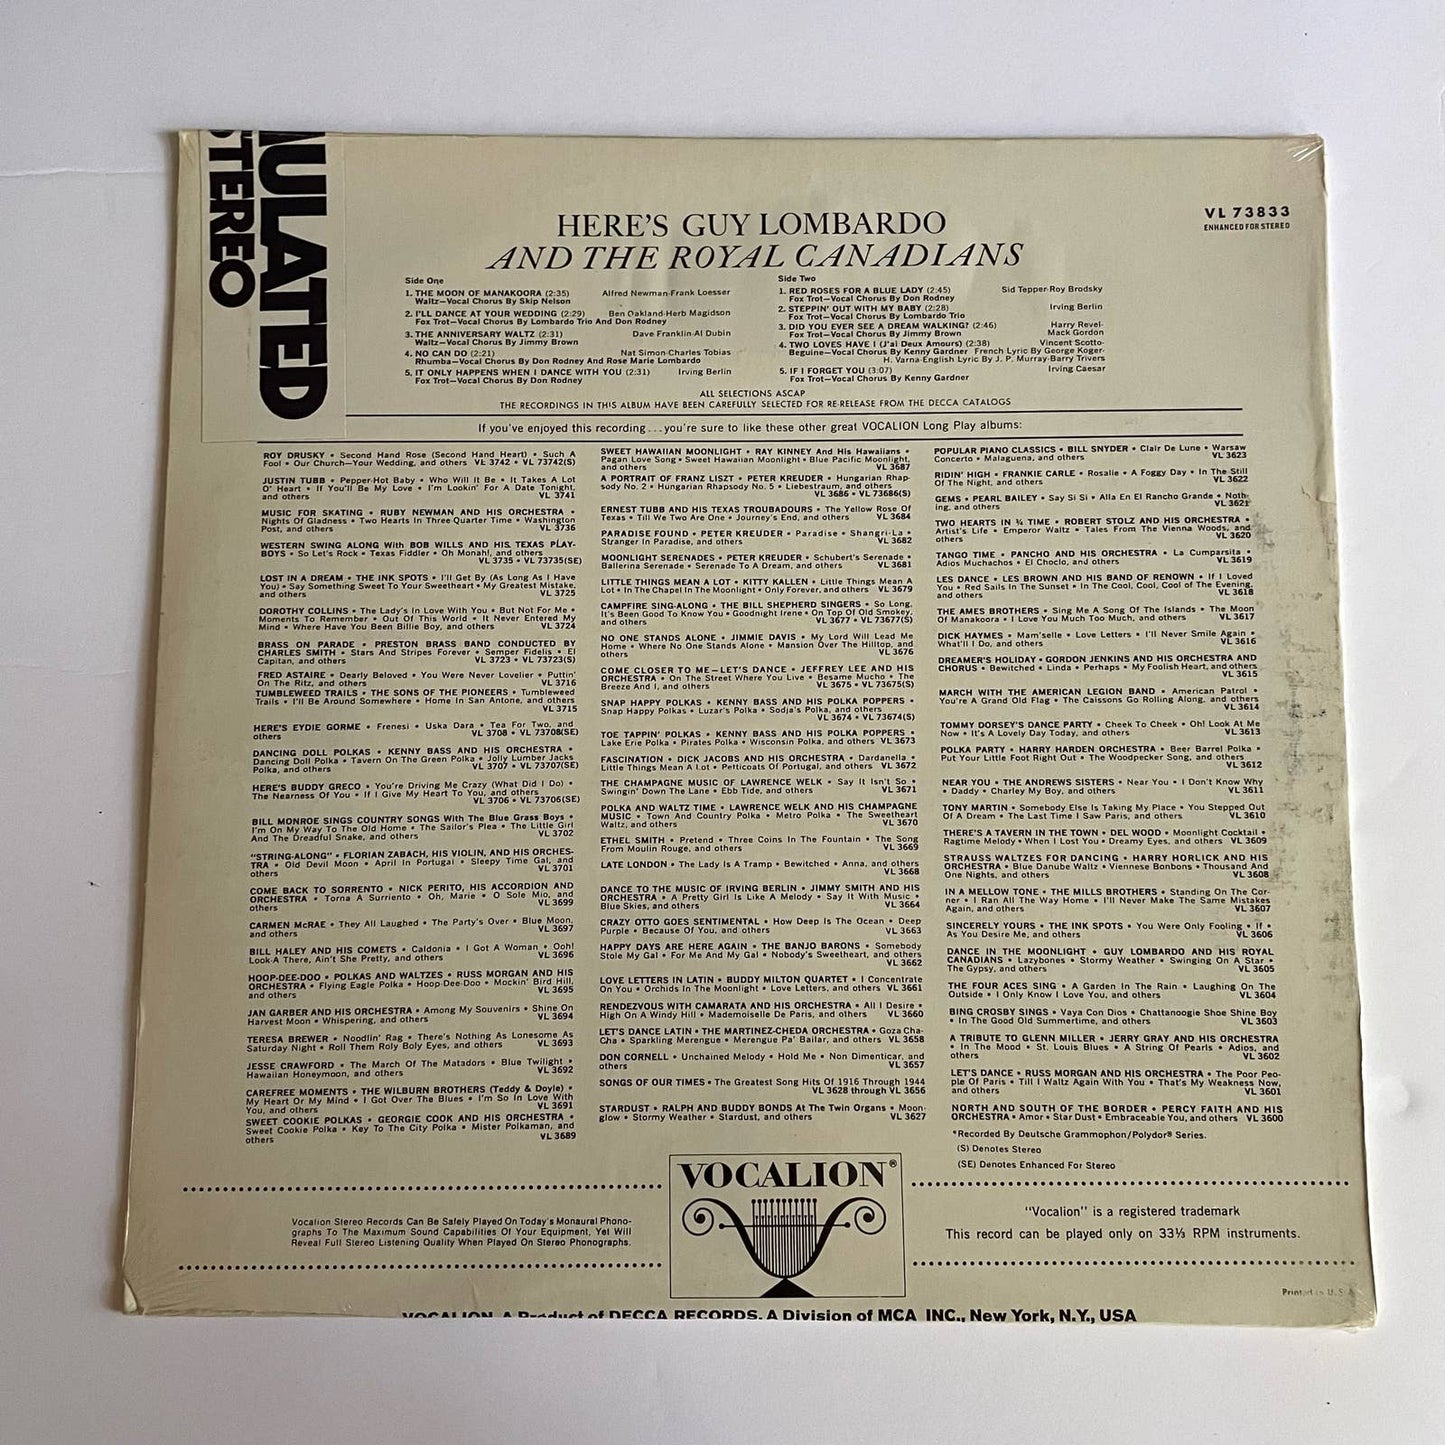 Here’s Guy Lombardo vintage vinyl record